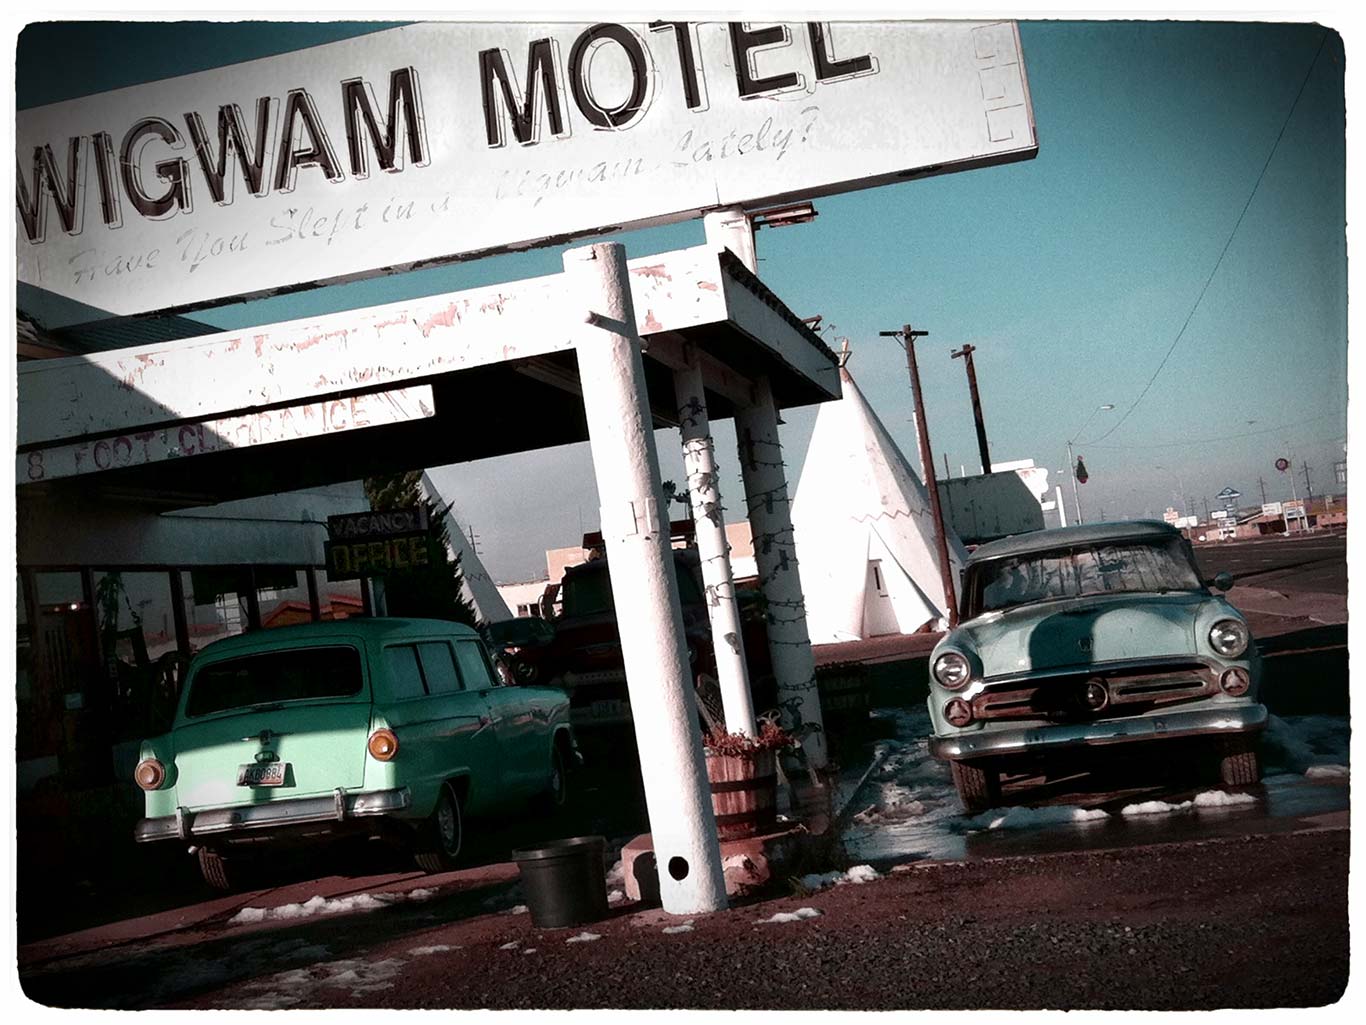 Wigwam Motel, Route 66 - Arizona